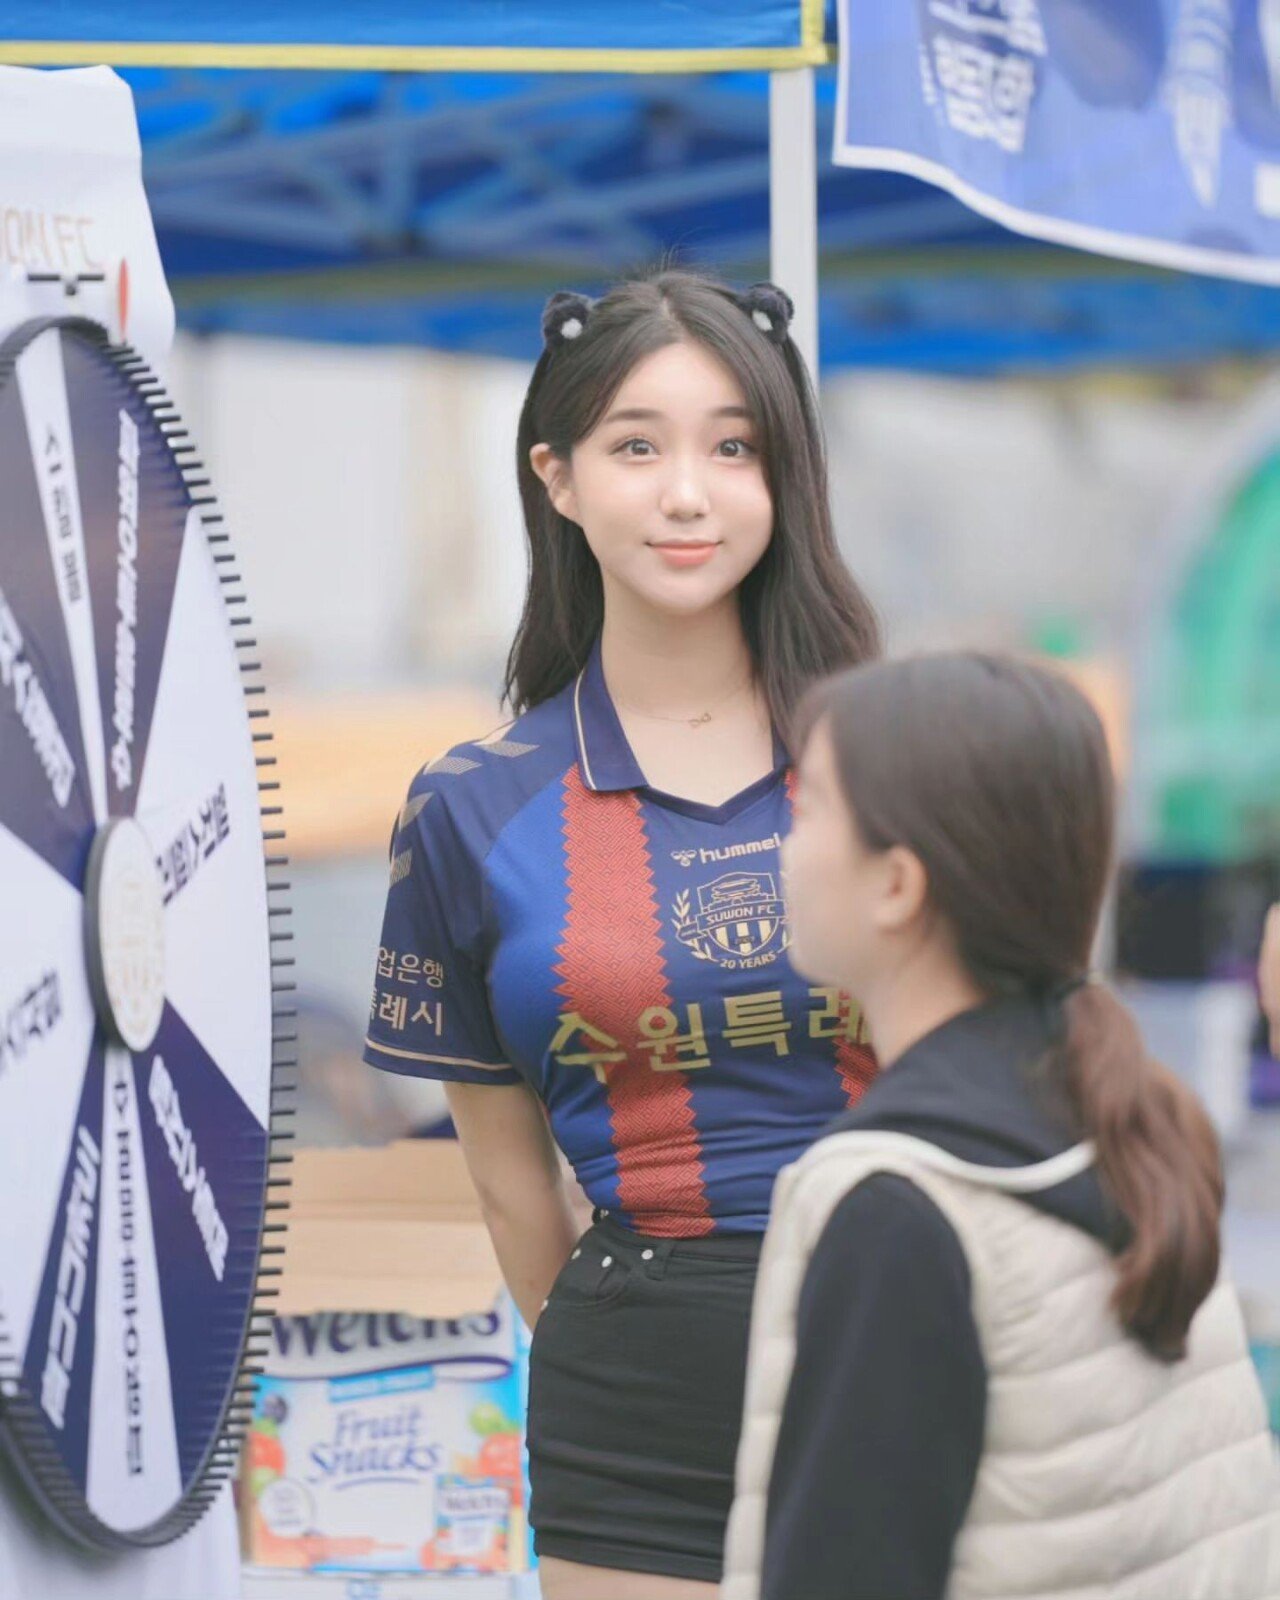 (SOUND)Kim Hyunyoung, cheerleader of Suwon Special City, wearing a teddy bear headband